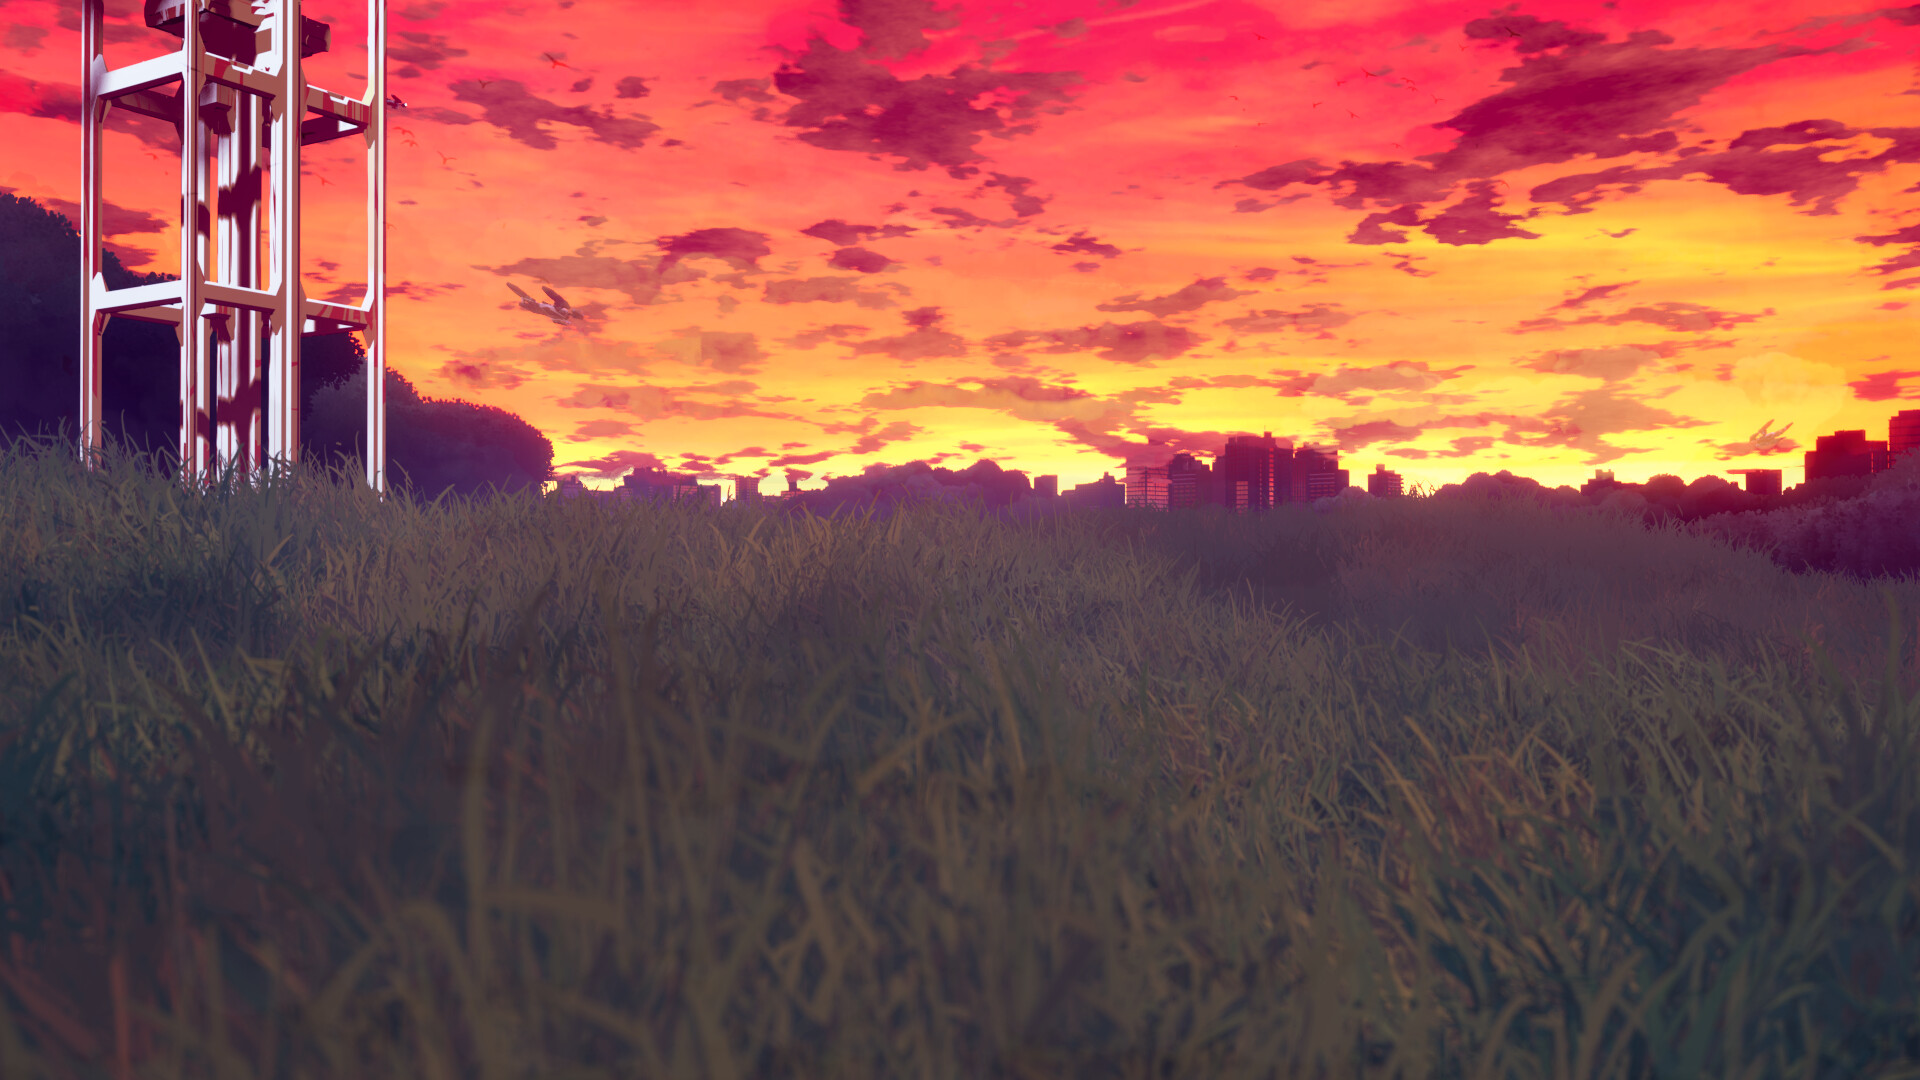 Anime Sunset #9 - Aesthetic Scenery NFT | OpenSea